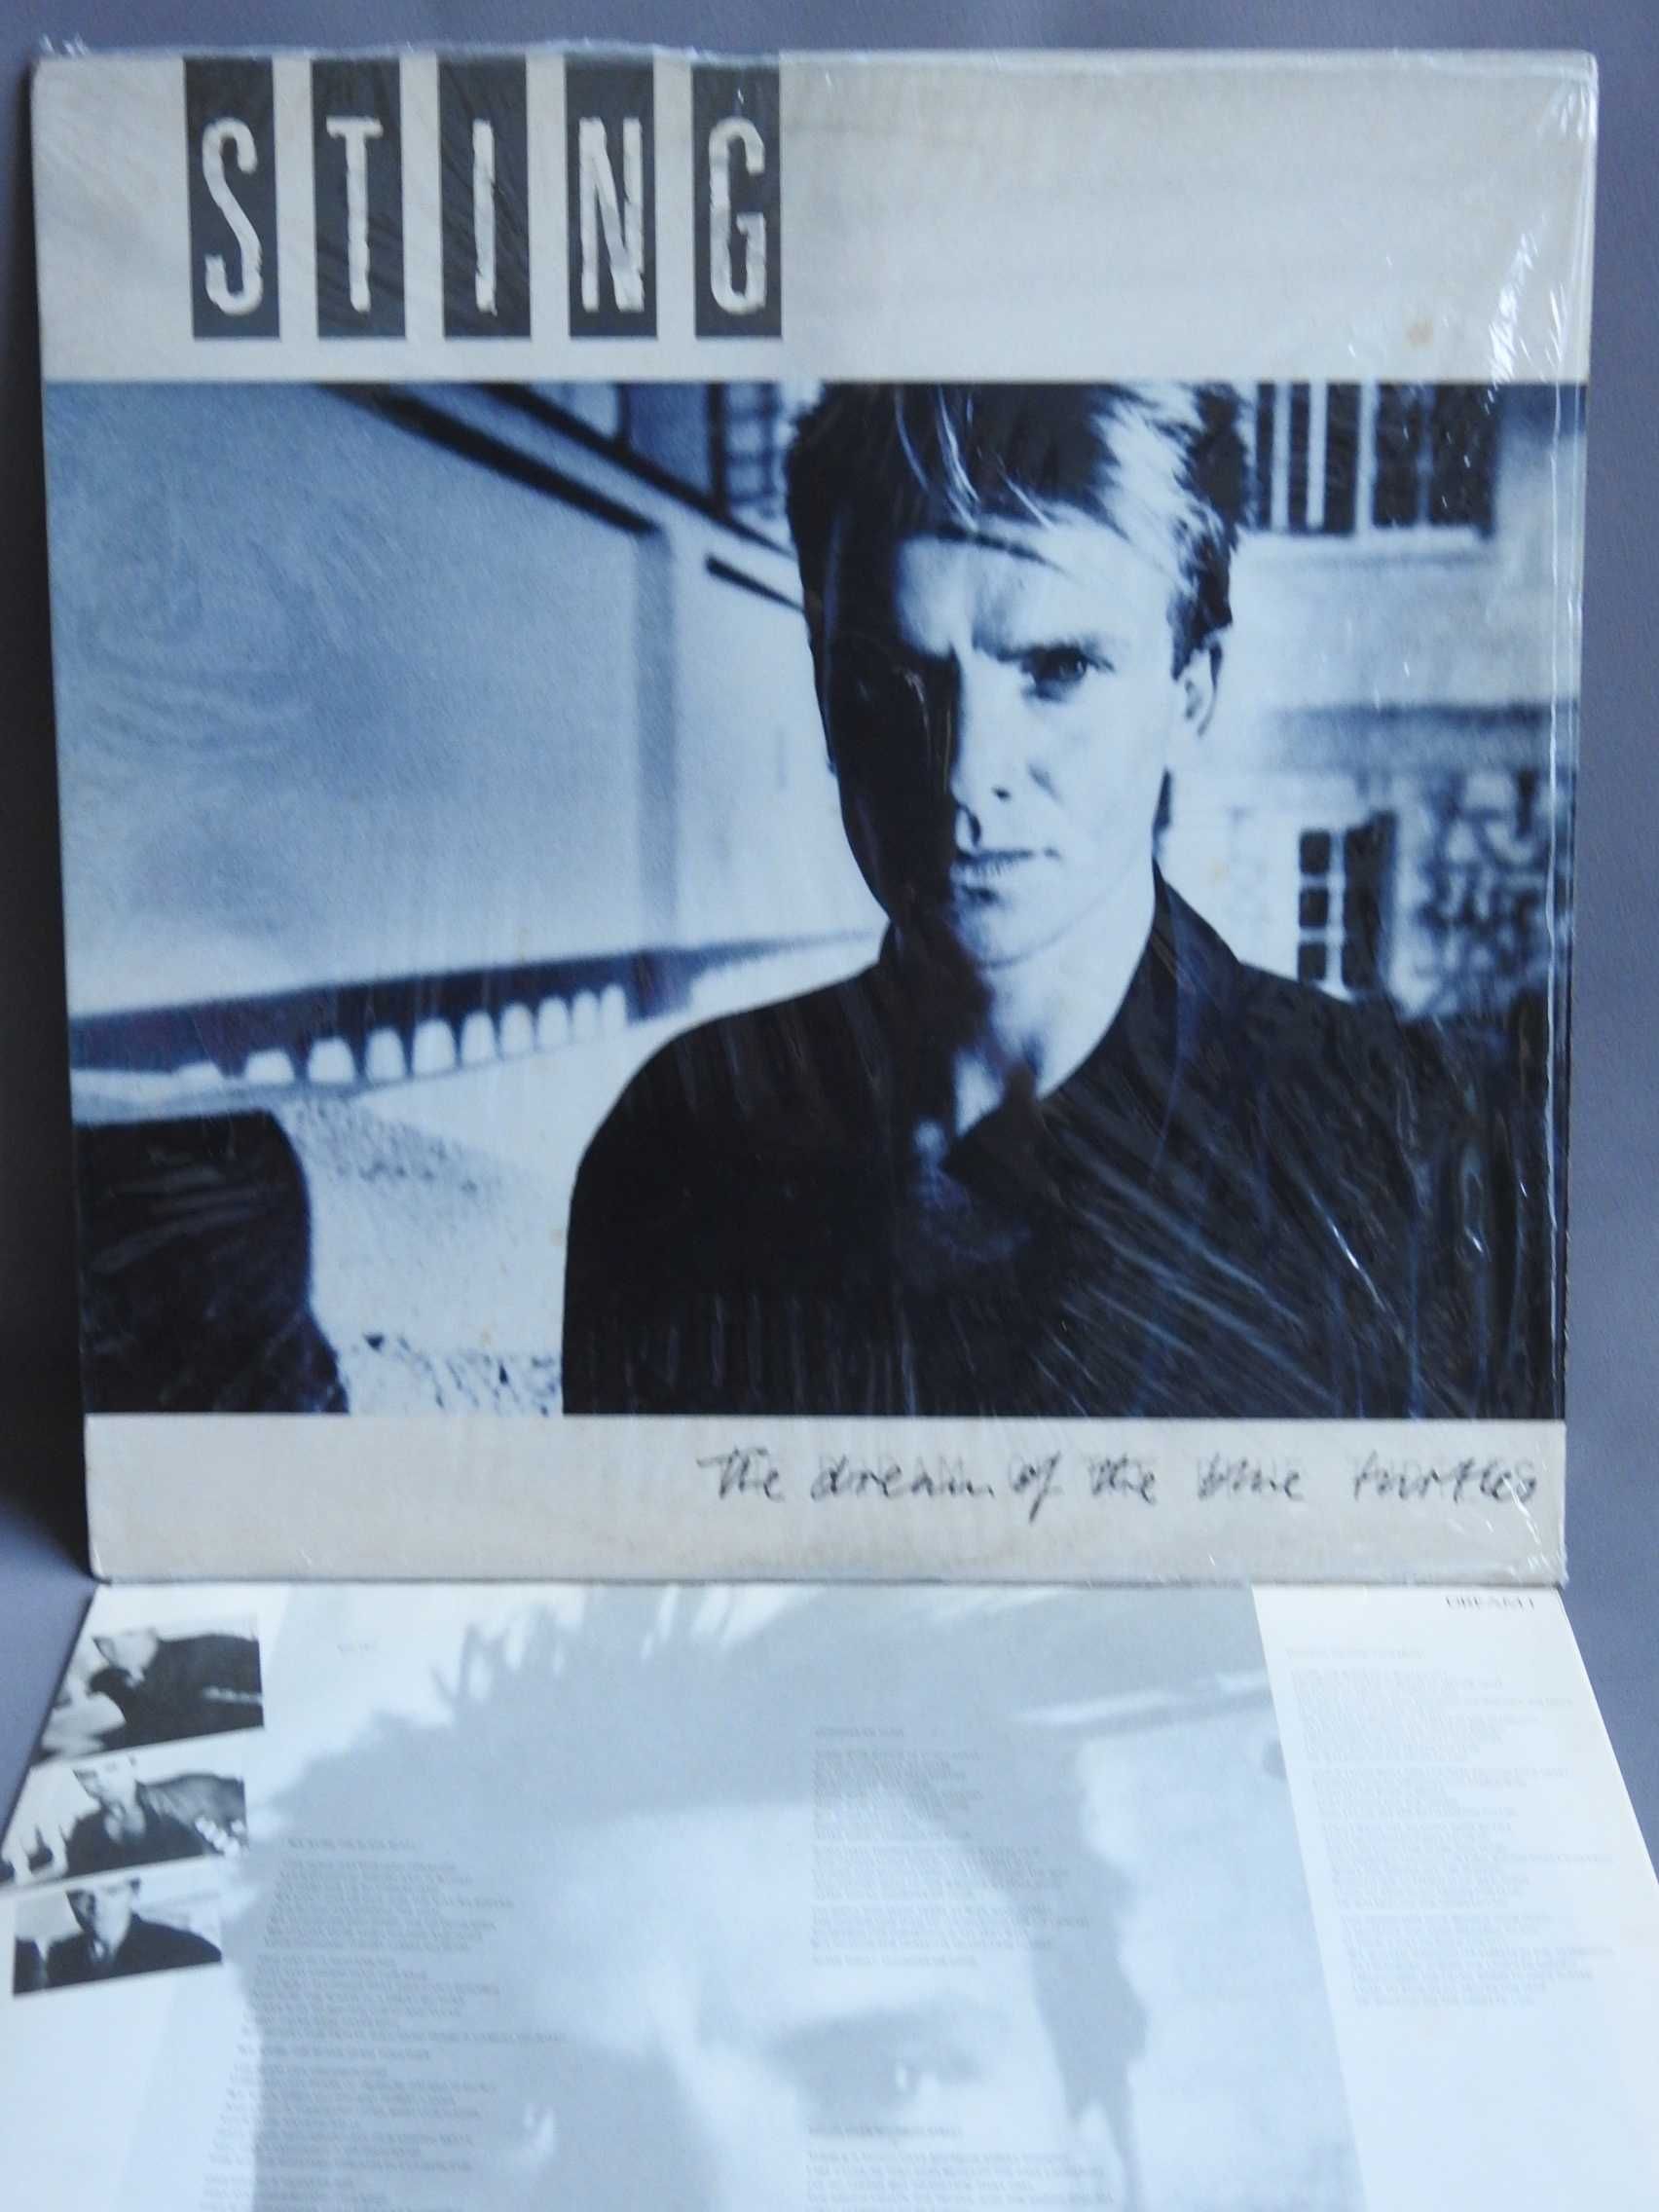 Sting The Dream Of The Blue Turtles LP 1985 UK пластинка Британия EX